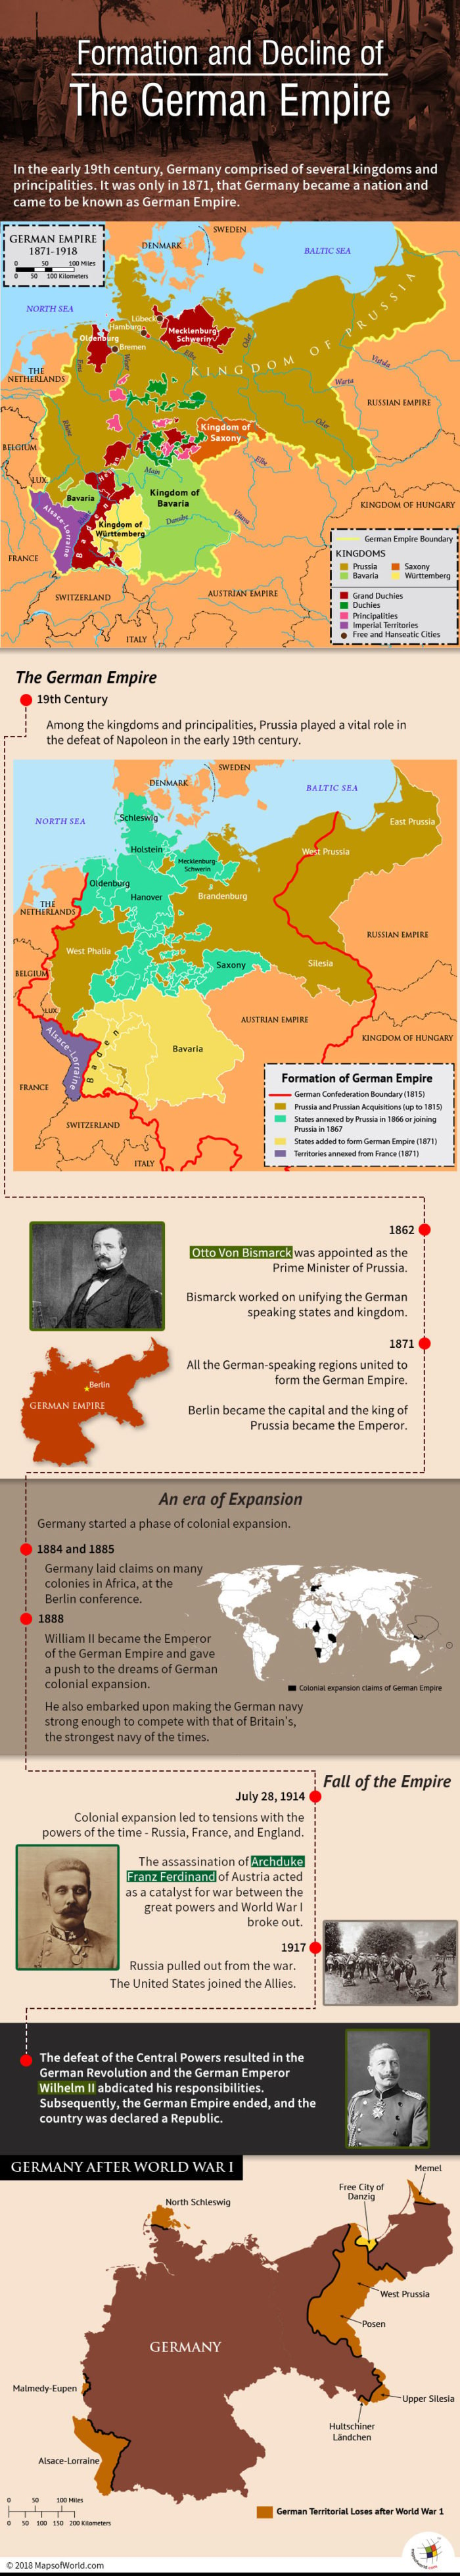 Infographic elaborating history of Germany